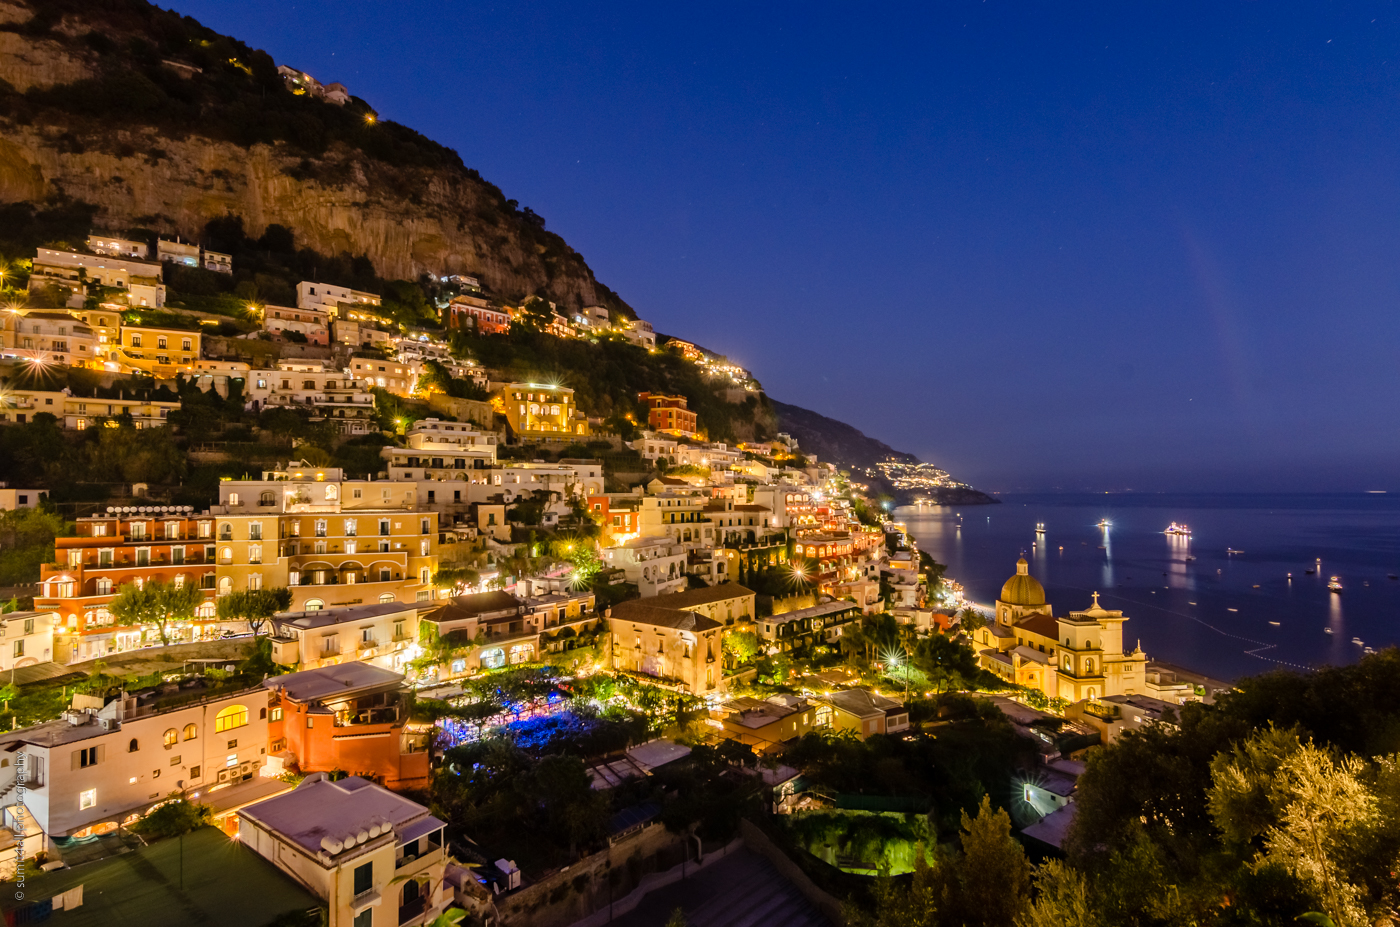 Blue Hour Photograph in Positano on the Amalfi Coast, Italy